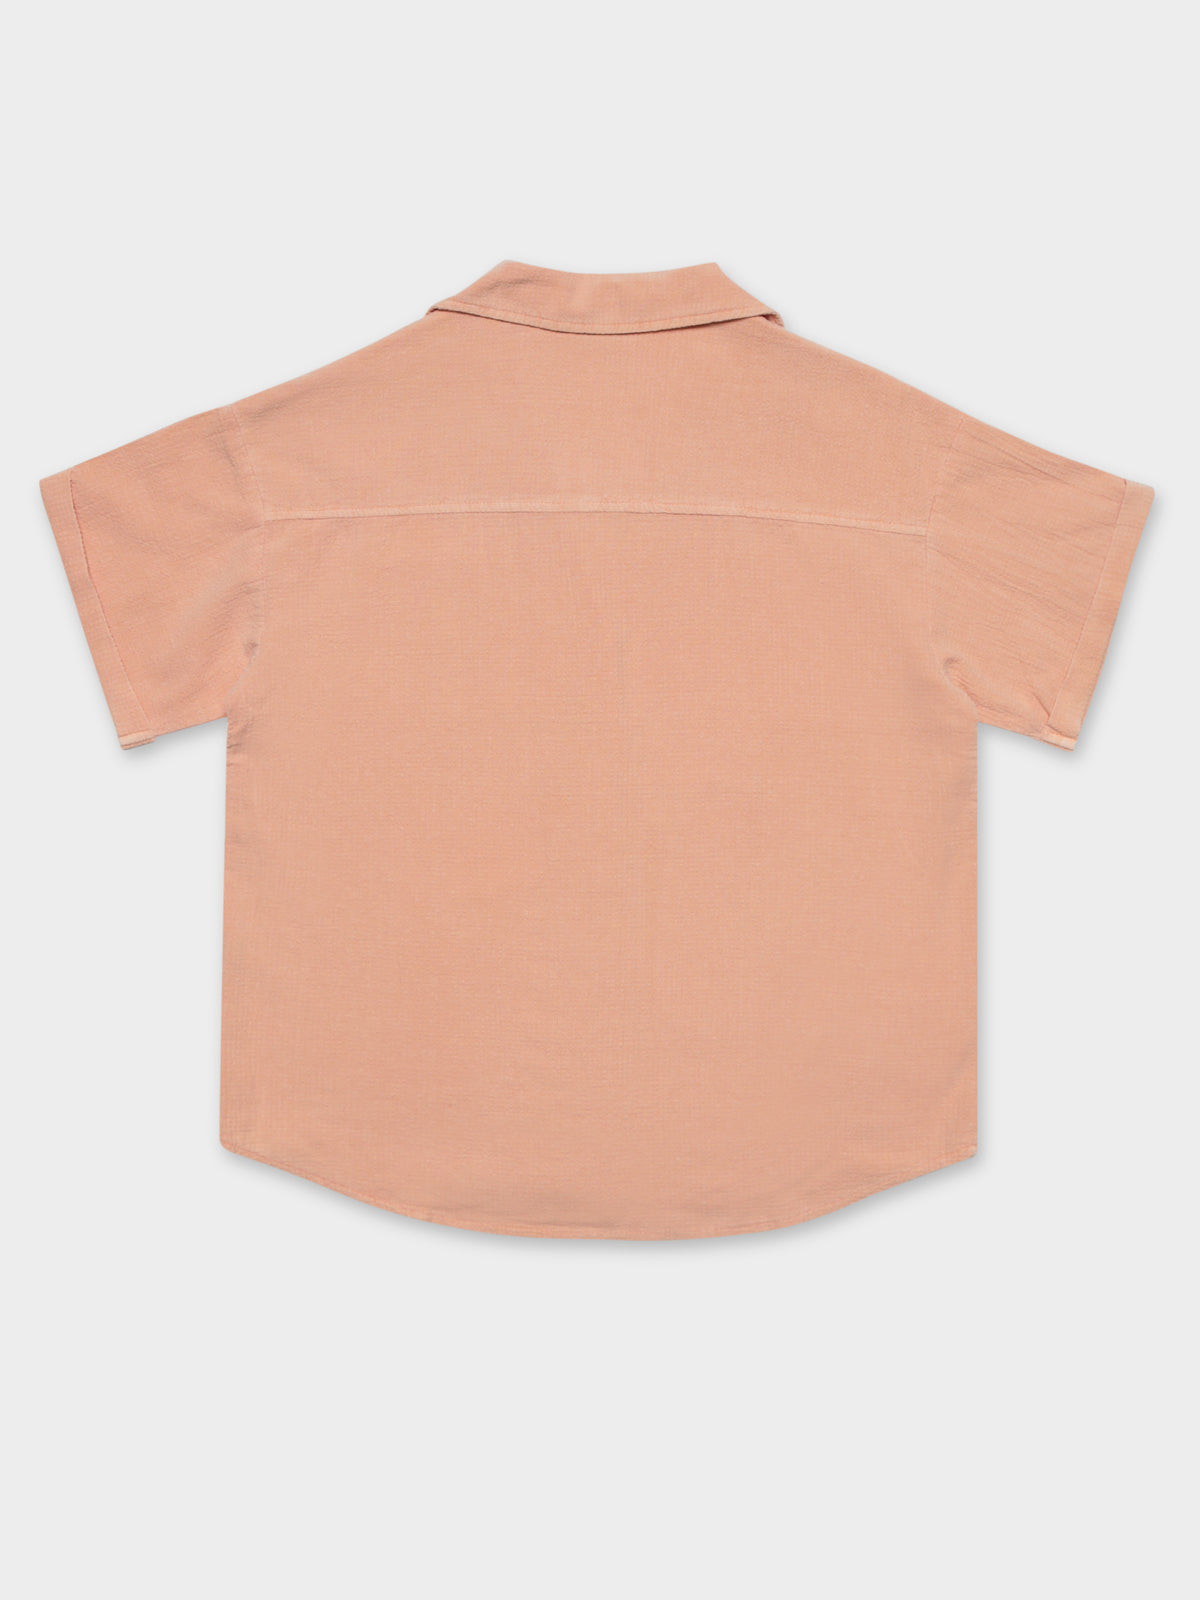 Vermont Oversized Shirt in Peach